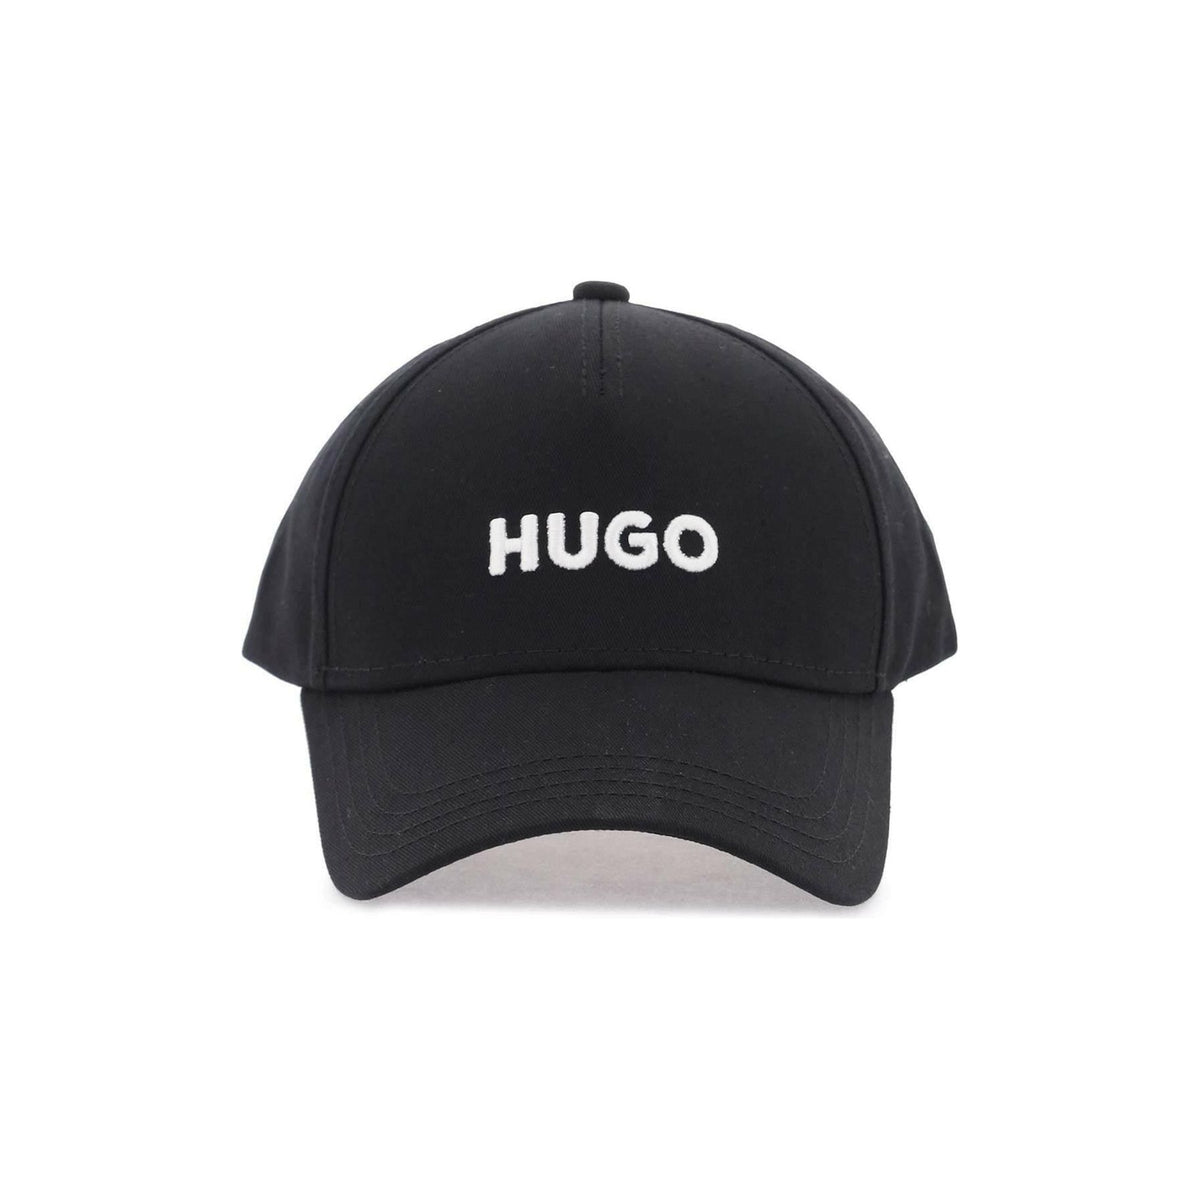 HUGO - Black Jude Embroidered Cotton Baseball Cap - JOHN JULIA